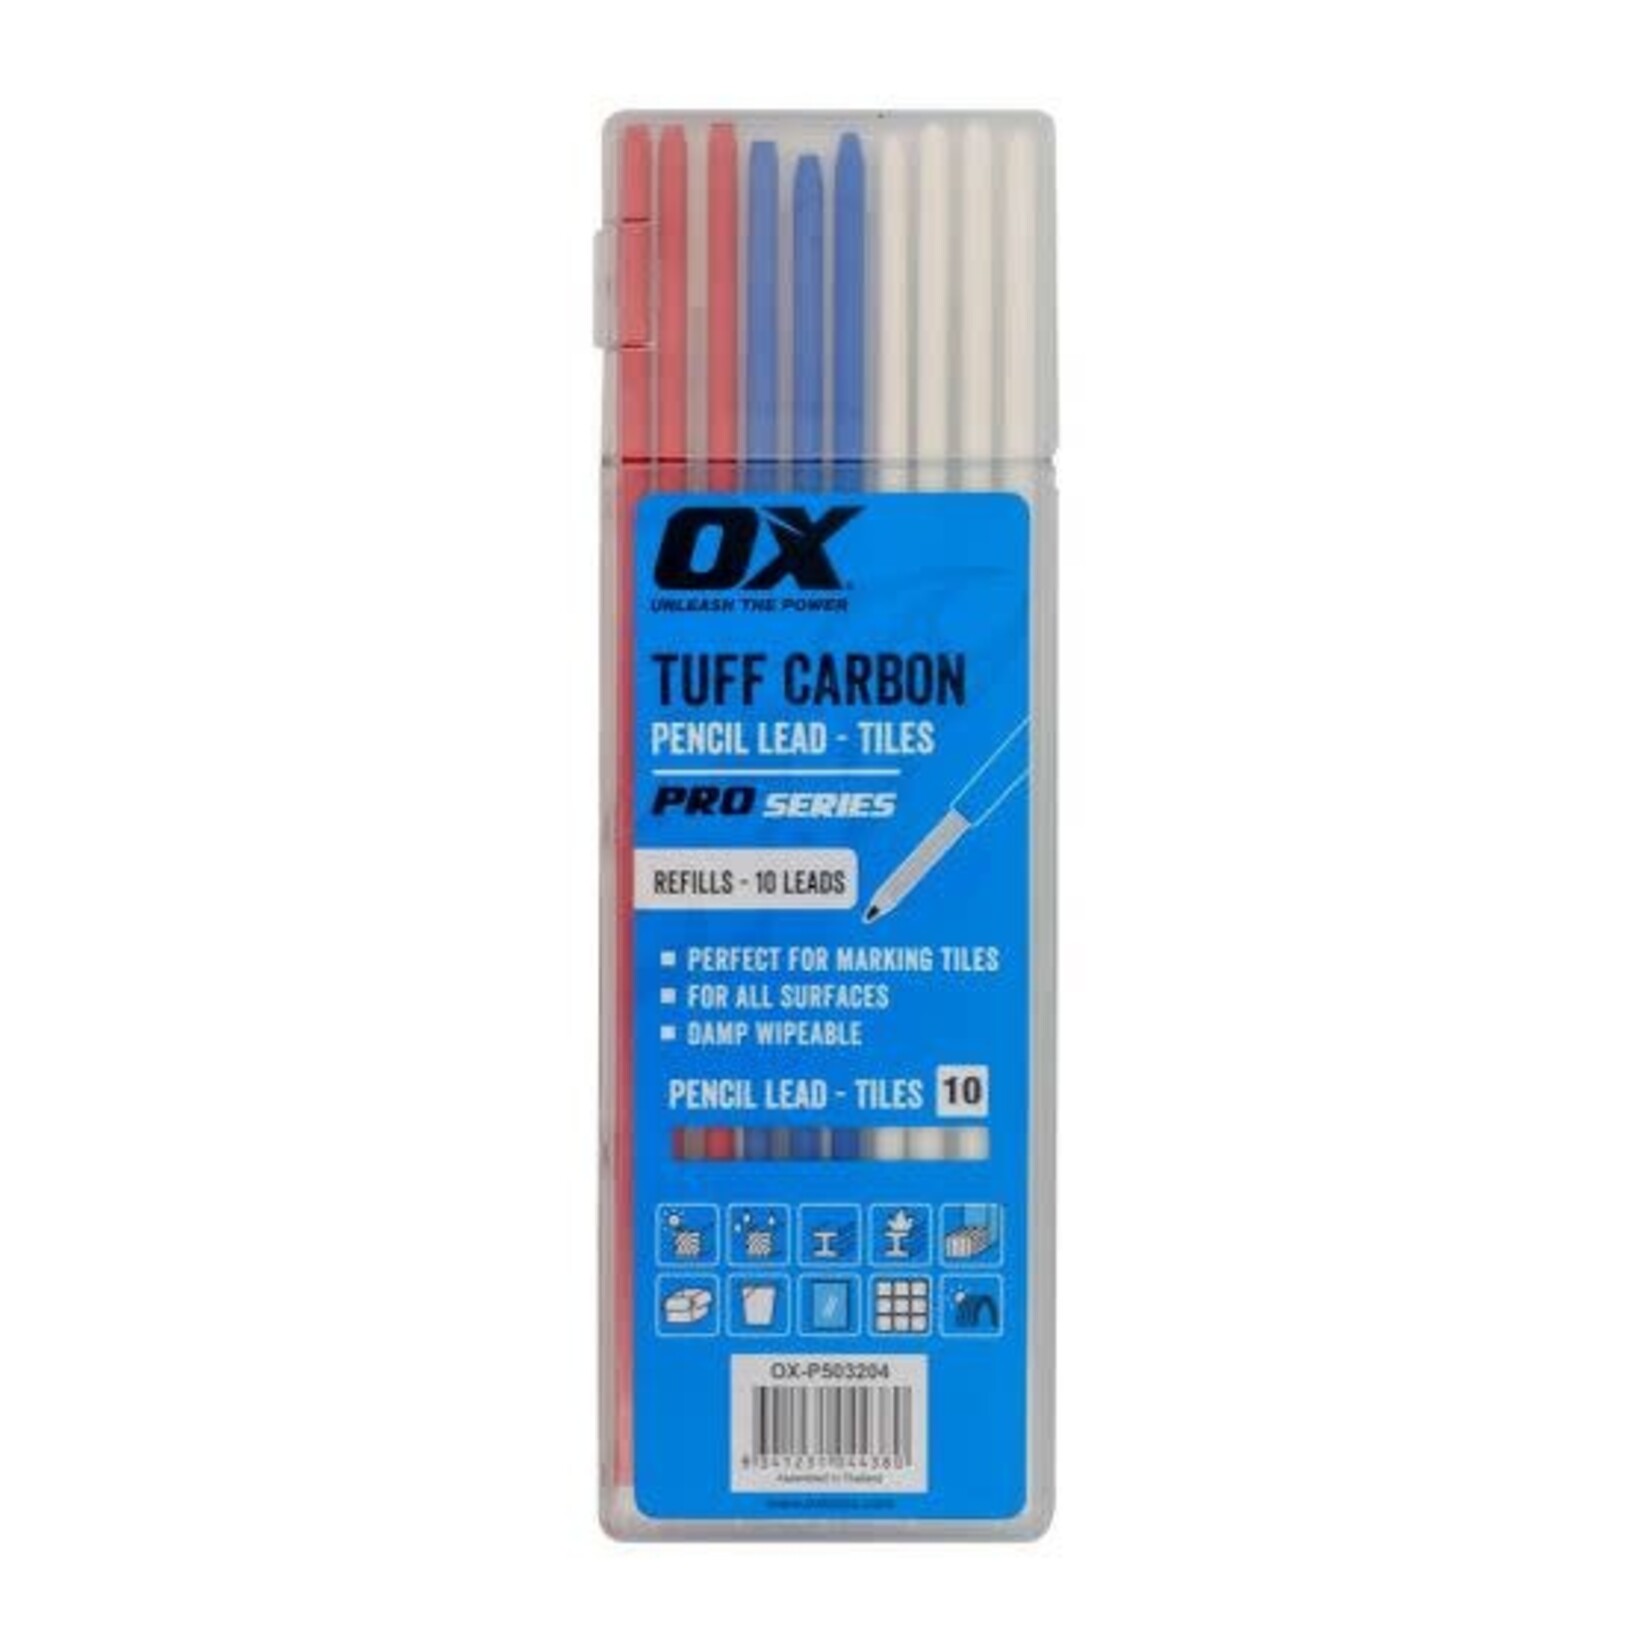 Ox Tools Tuff Carbon Marking Pencil Refills 10 leads